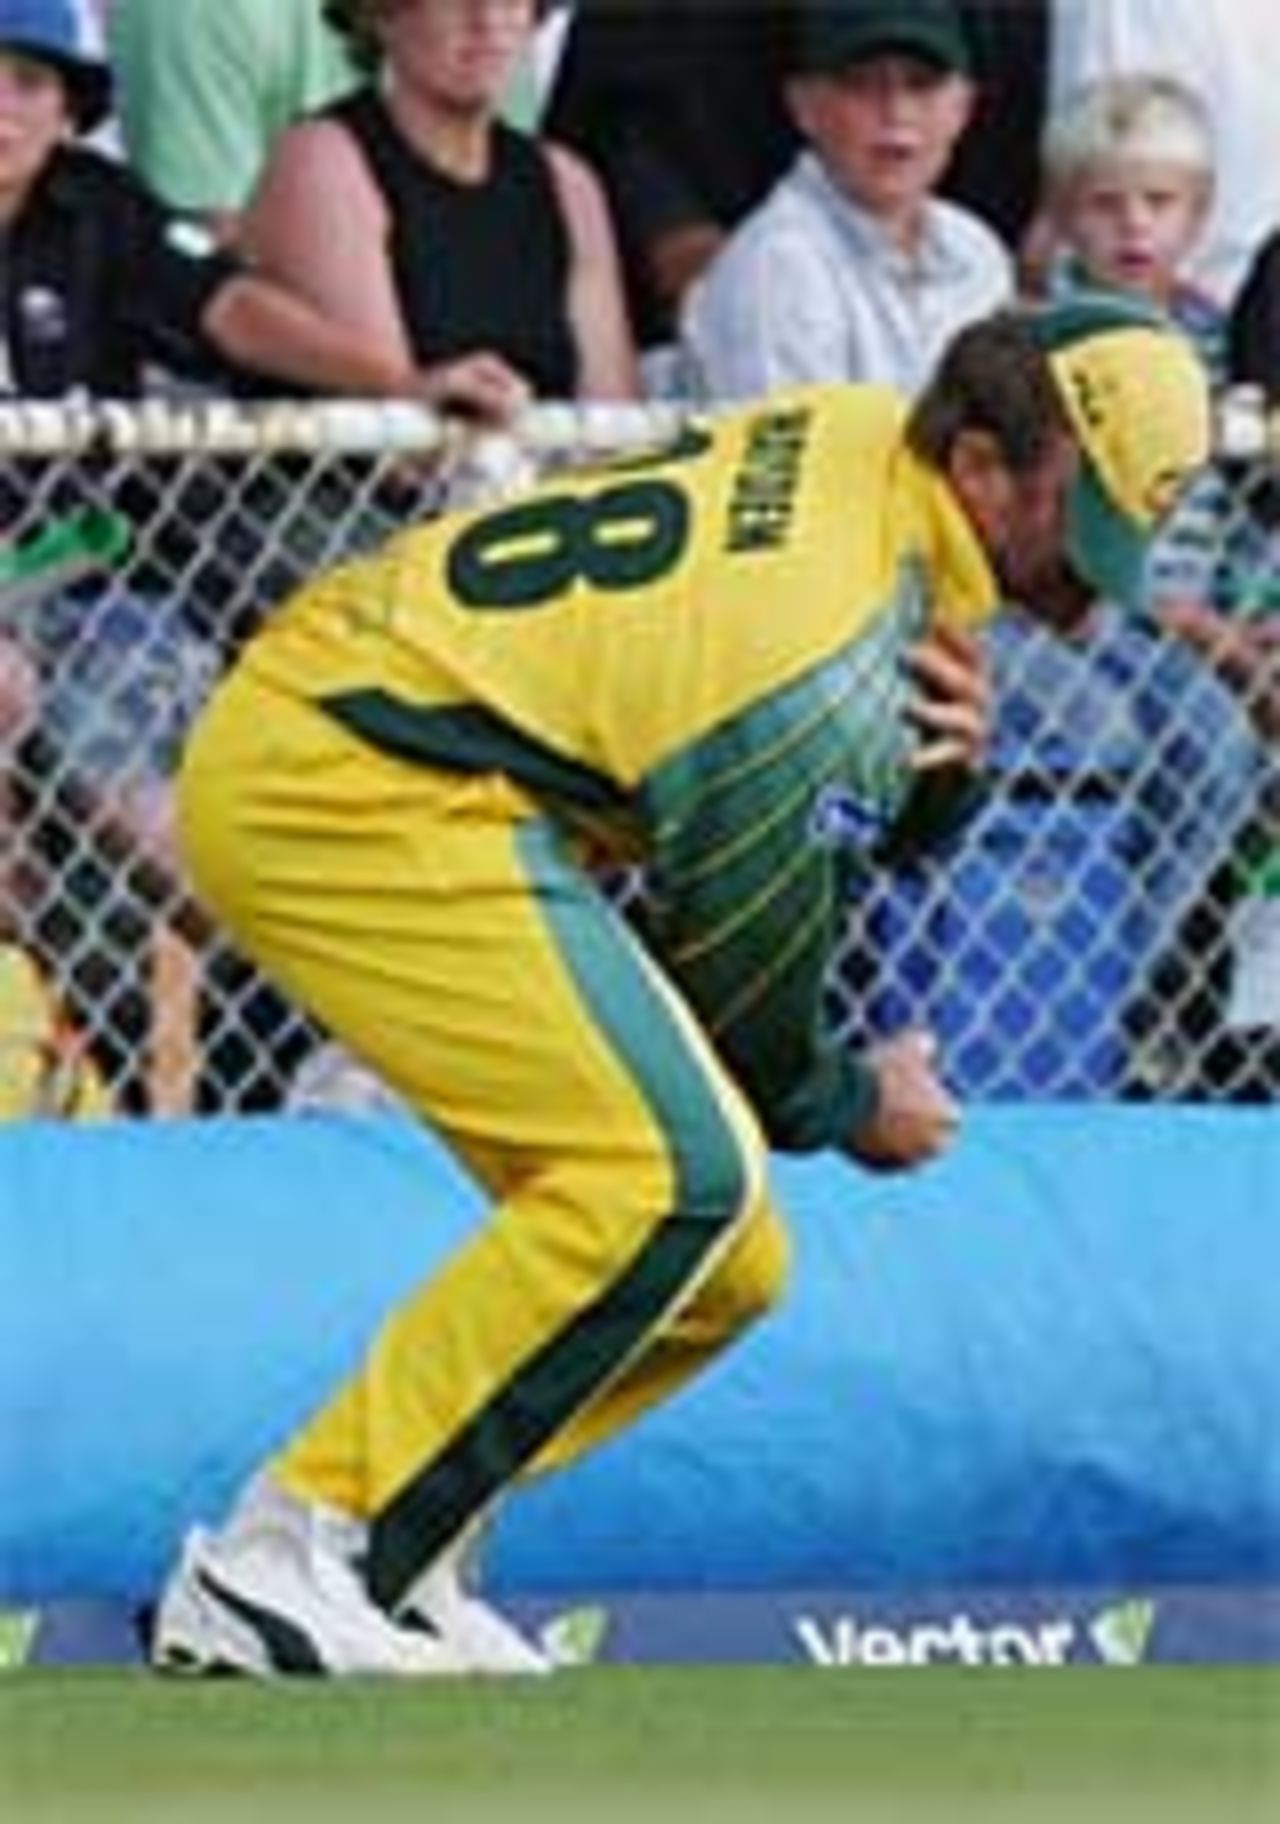 Matthew Hayden clutches his shoulder in agony, New Zealand v Australia, 2nd ODI, Christchurch, February 22, 2005